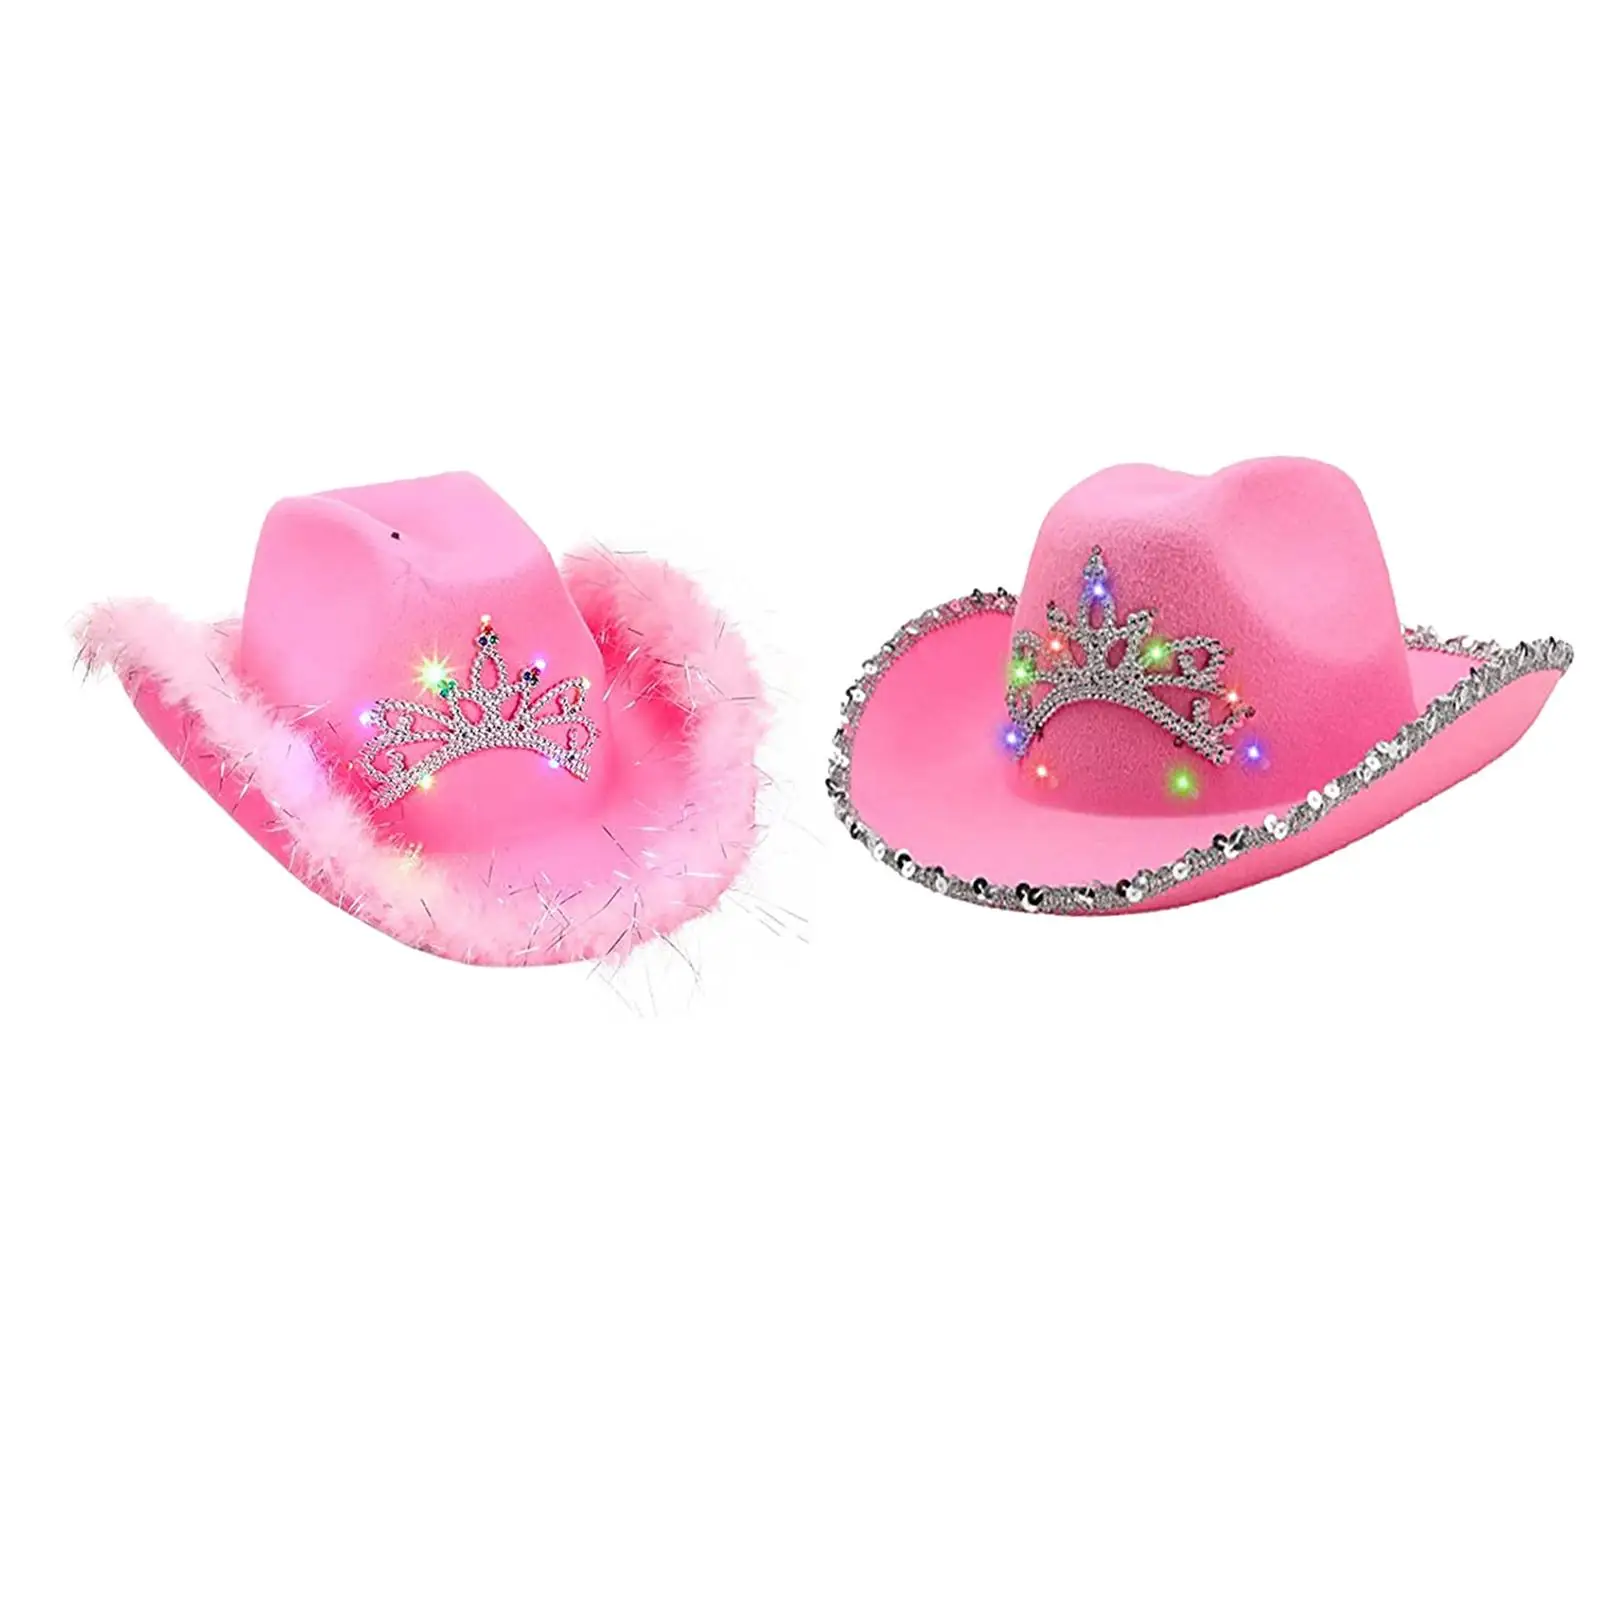 Western Style Pink Cowboy Hat Women`s Fashion Party Warped Wide Brim with Sequin Decoration Crown Tiara Cowgirl Hat